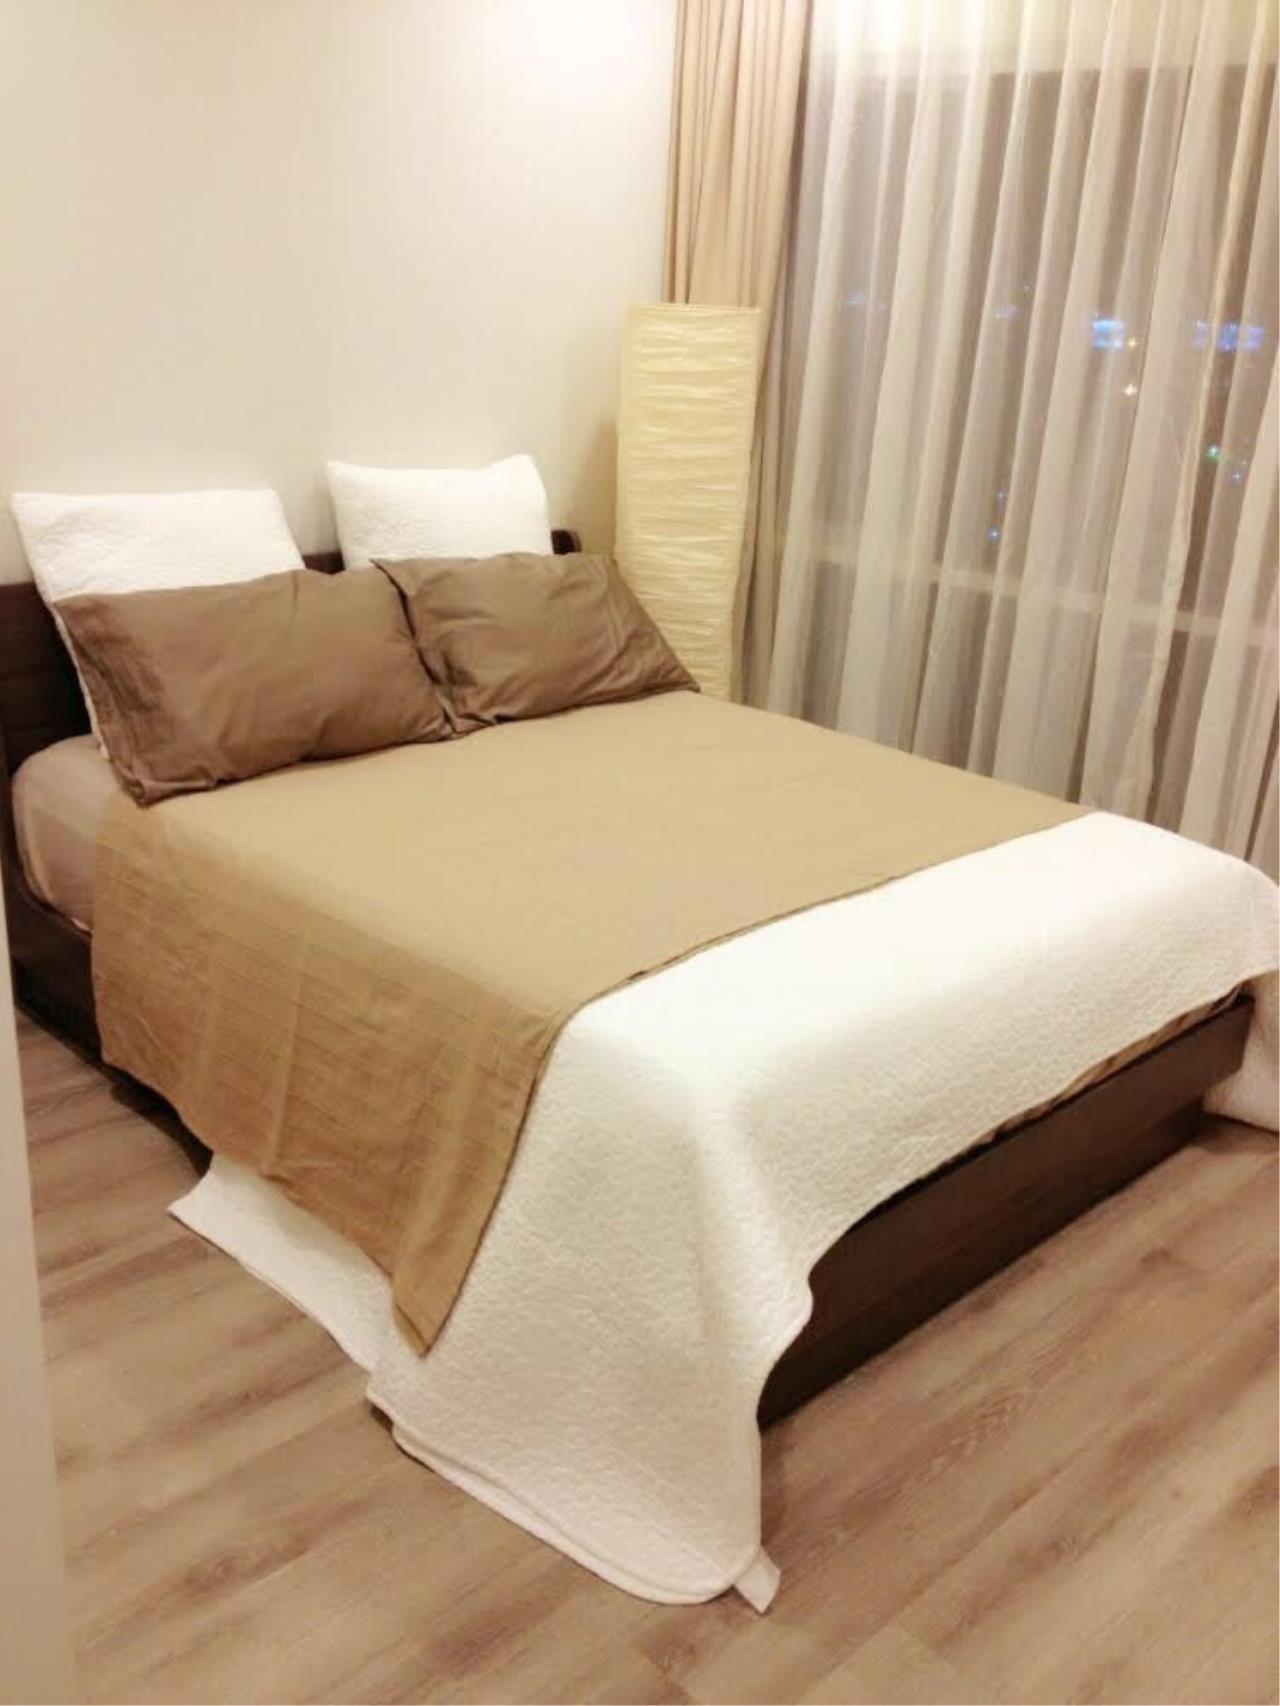 Arken Estate Agency Property Agency near BTS & MRT Agency's For Rent..Centric Sathorn 2 bed 2 bath 1